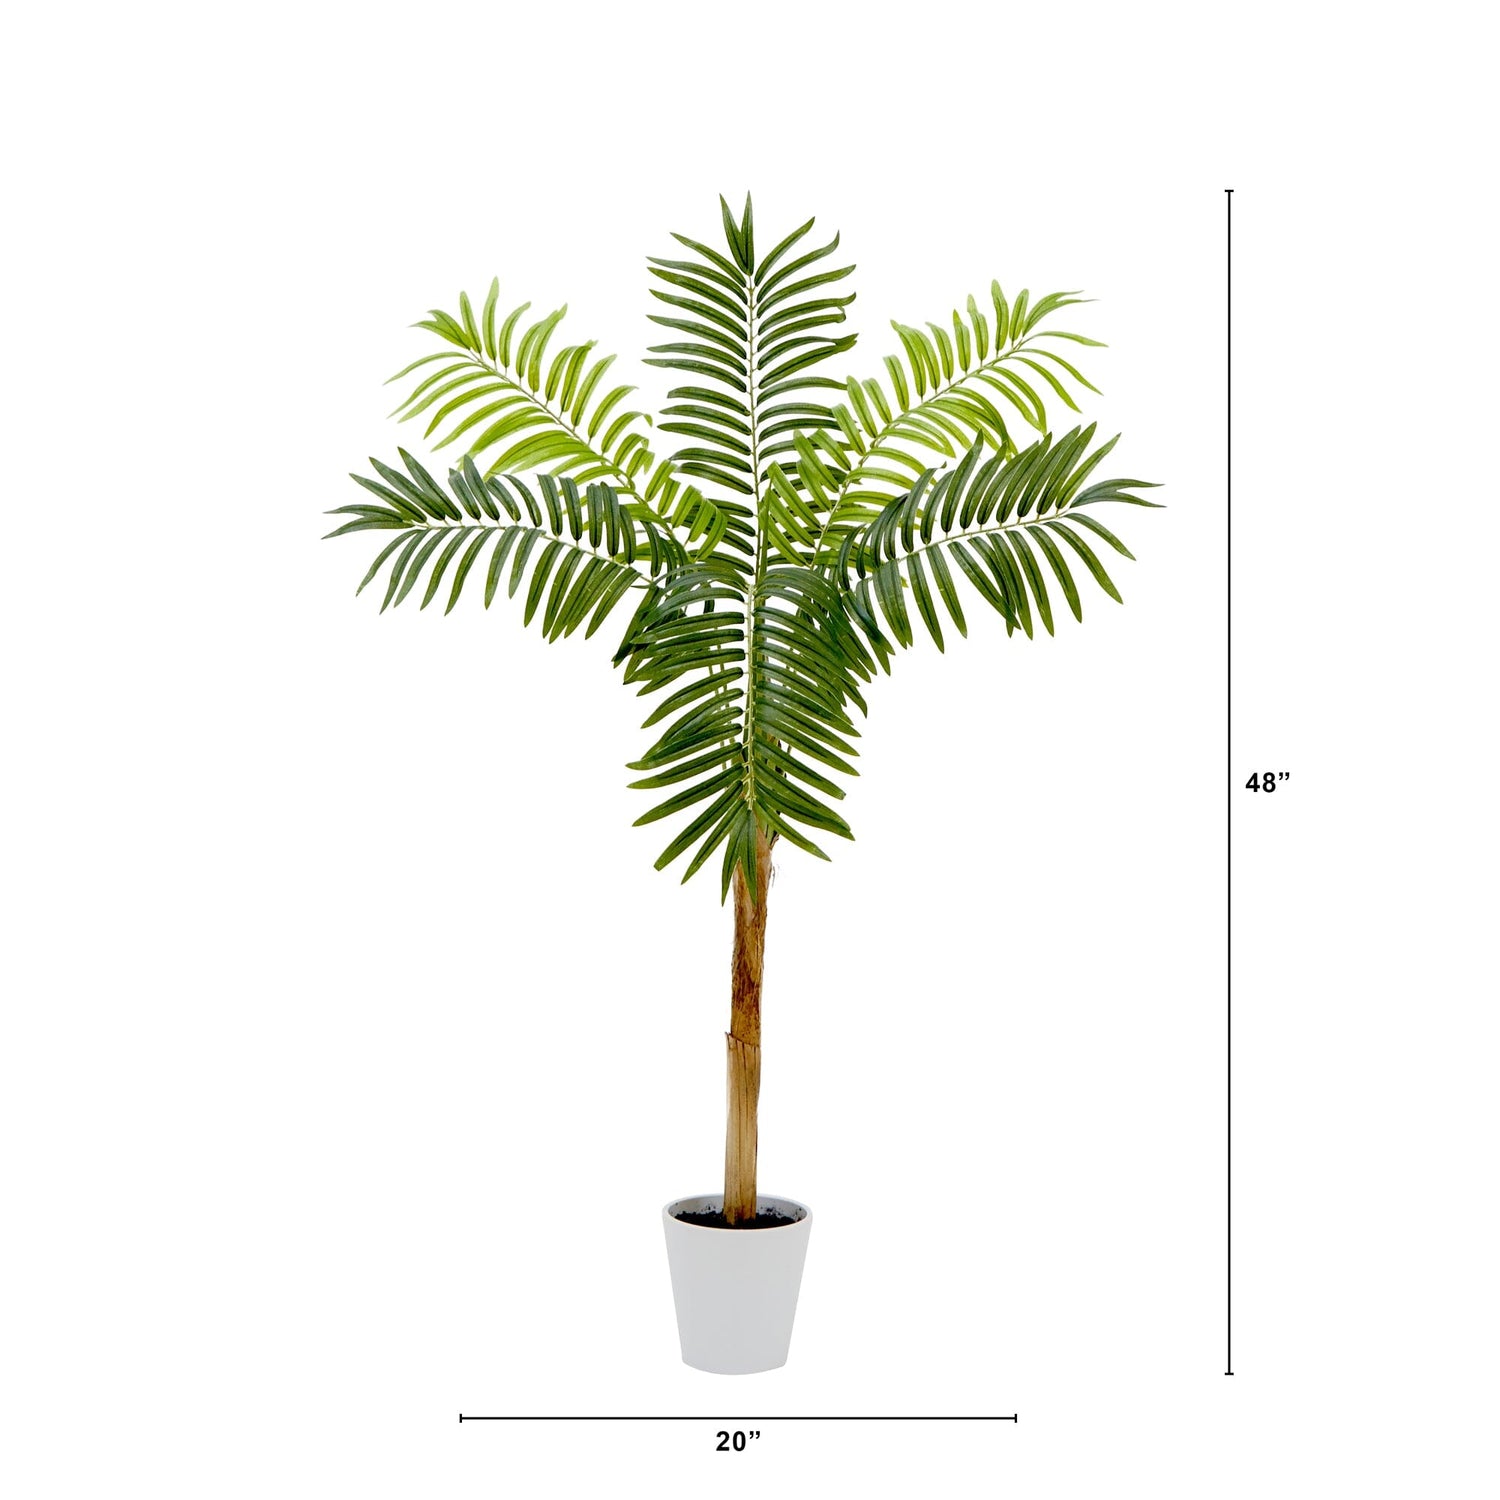 4’ Artificial Areca Palm Tree with Decorative Planter